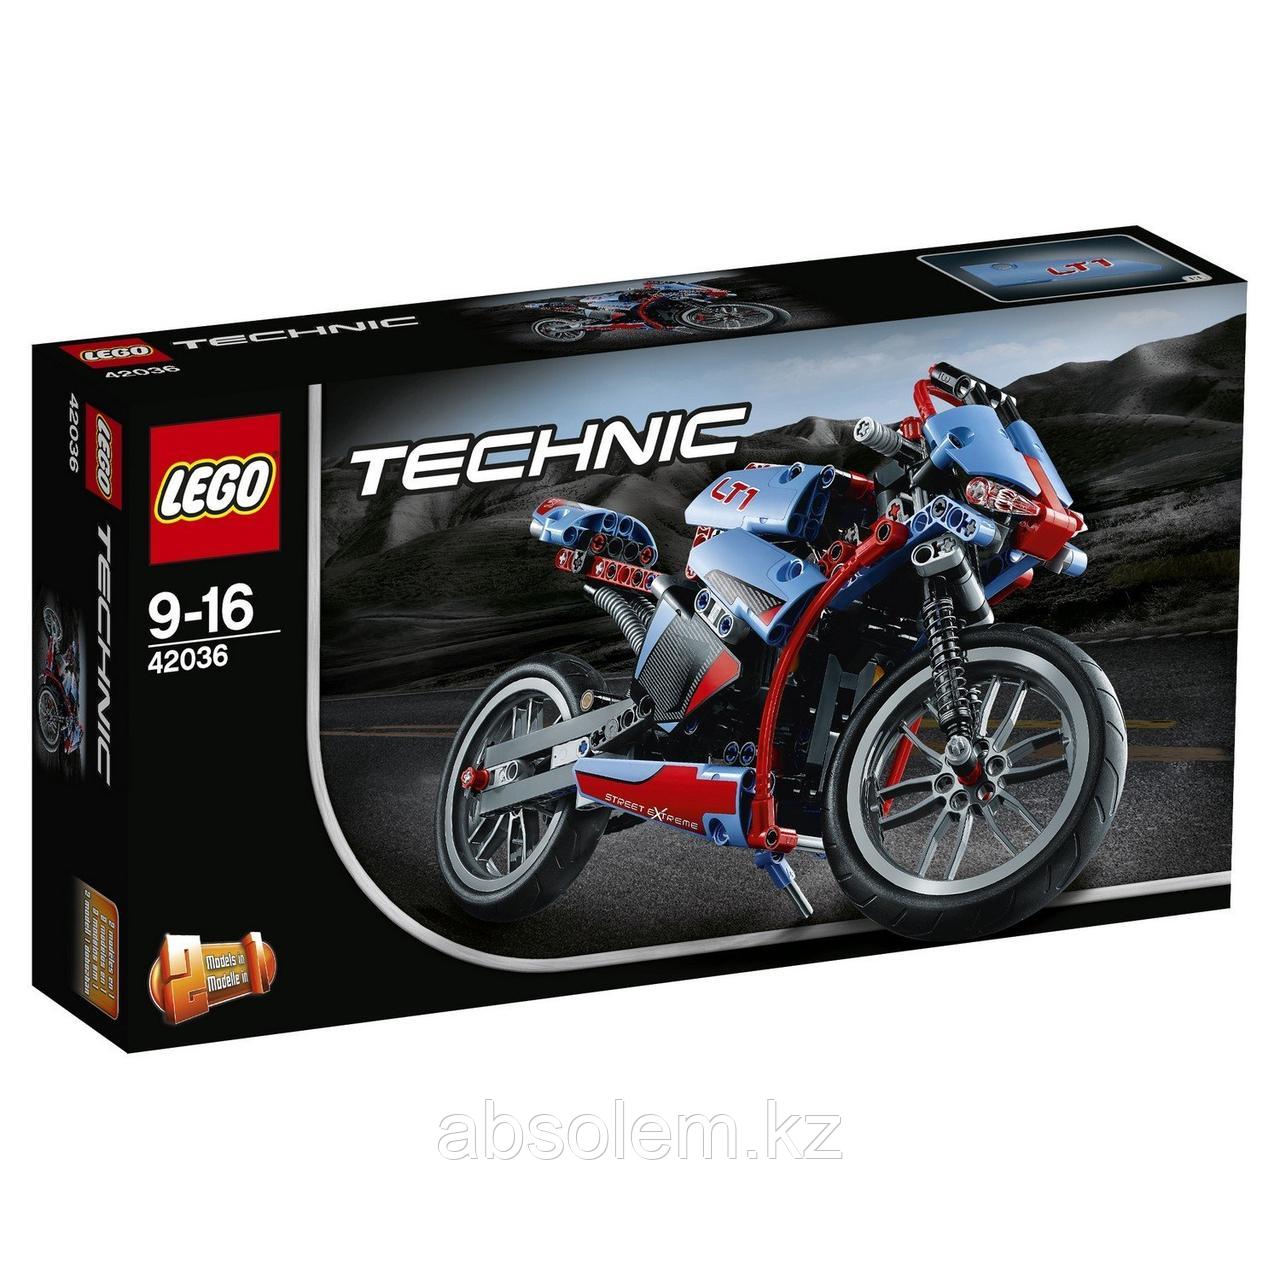 LEGO 42036 Technic Спортбайк